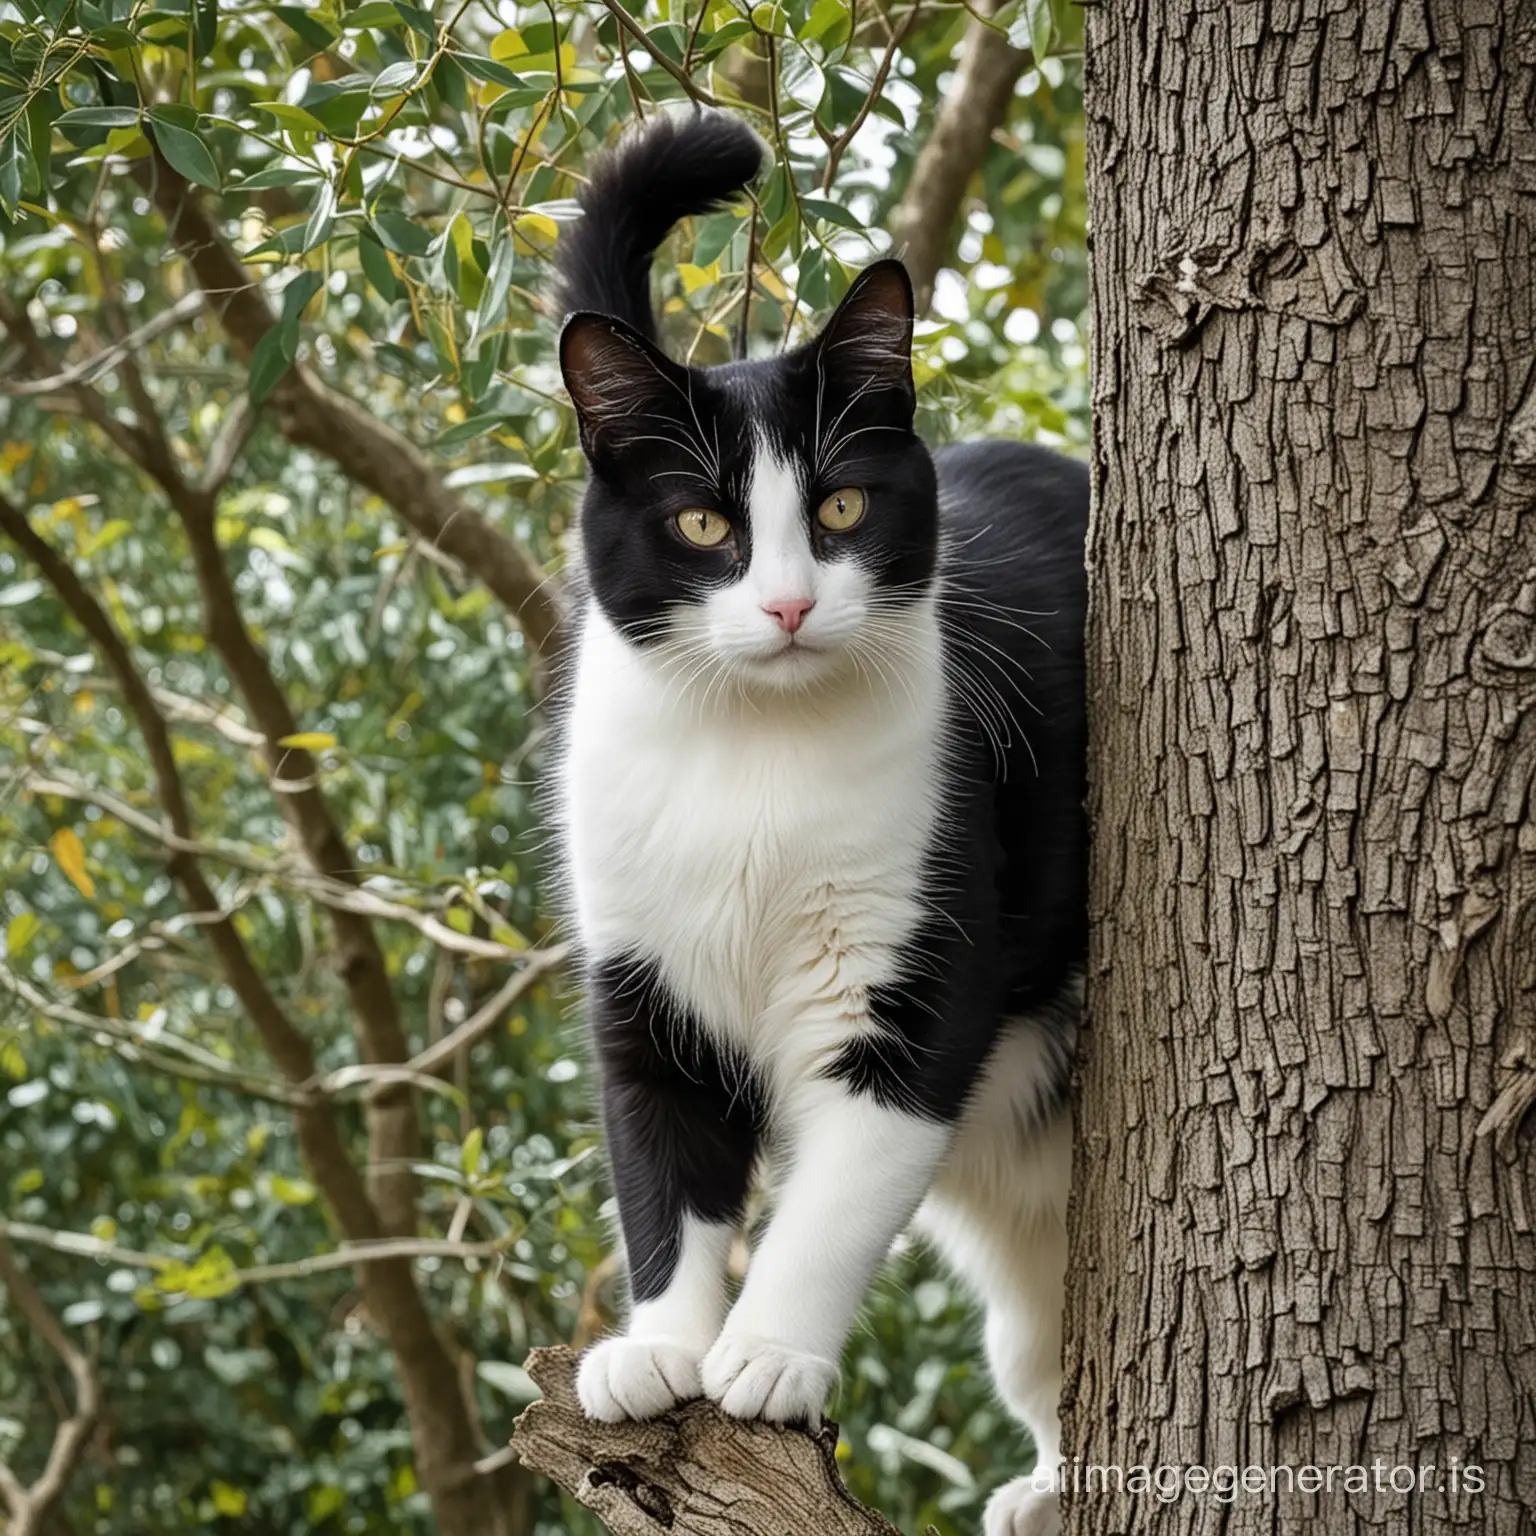 Adventurous-Black-and-White-Cat-Climbing-Tree